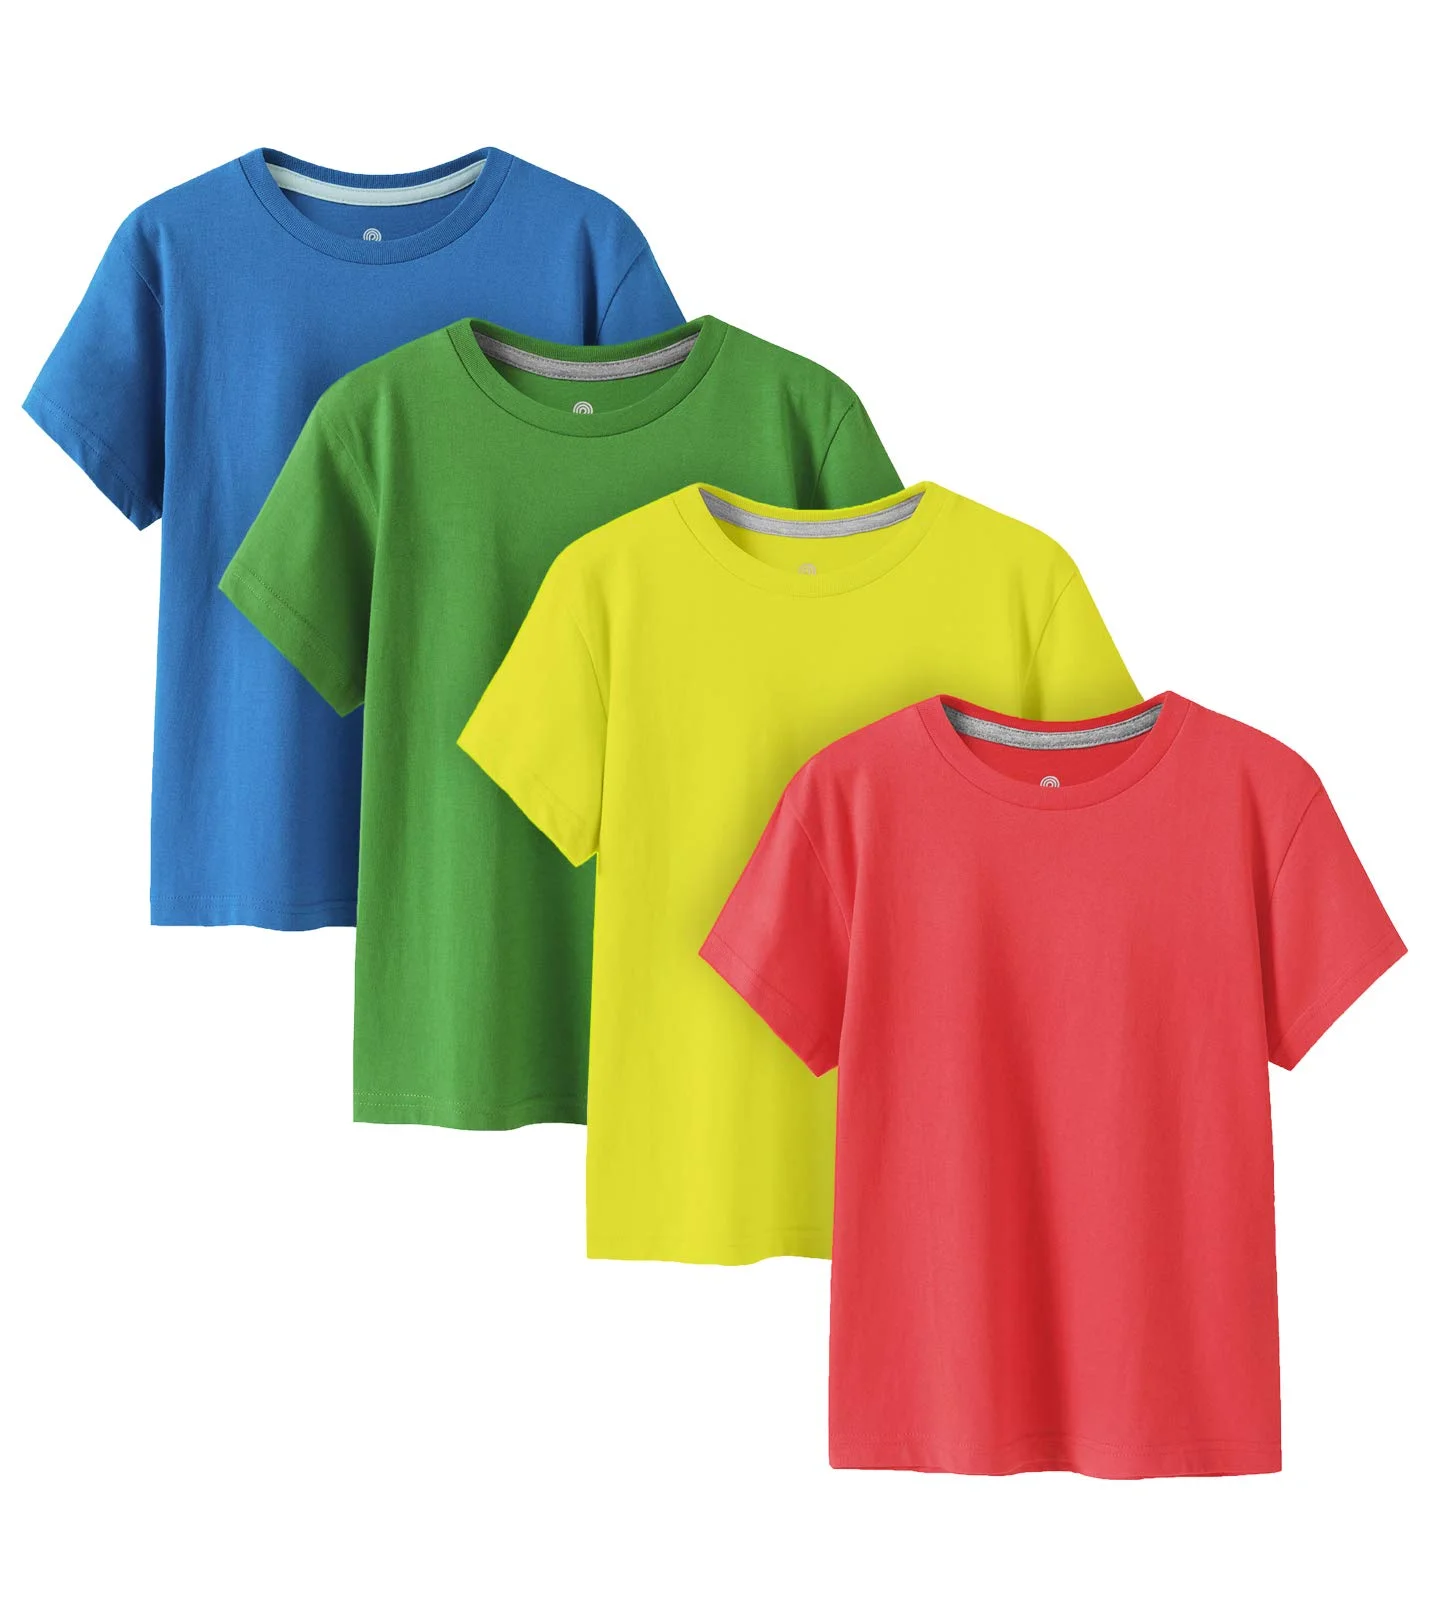 Wholesale T-shirts Channel Islands